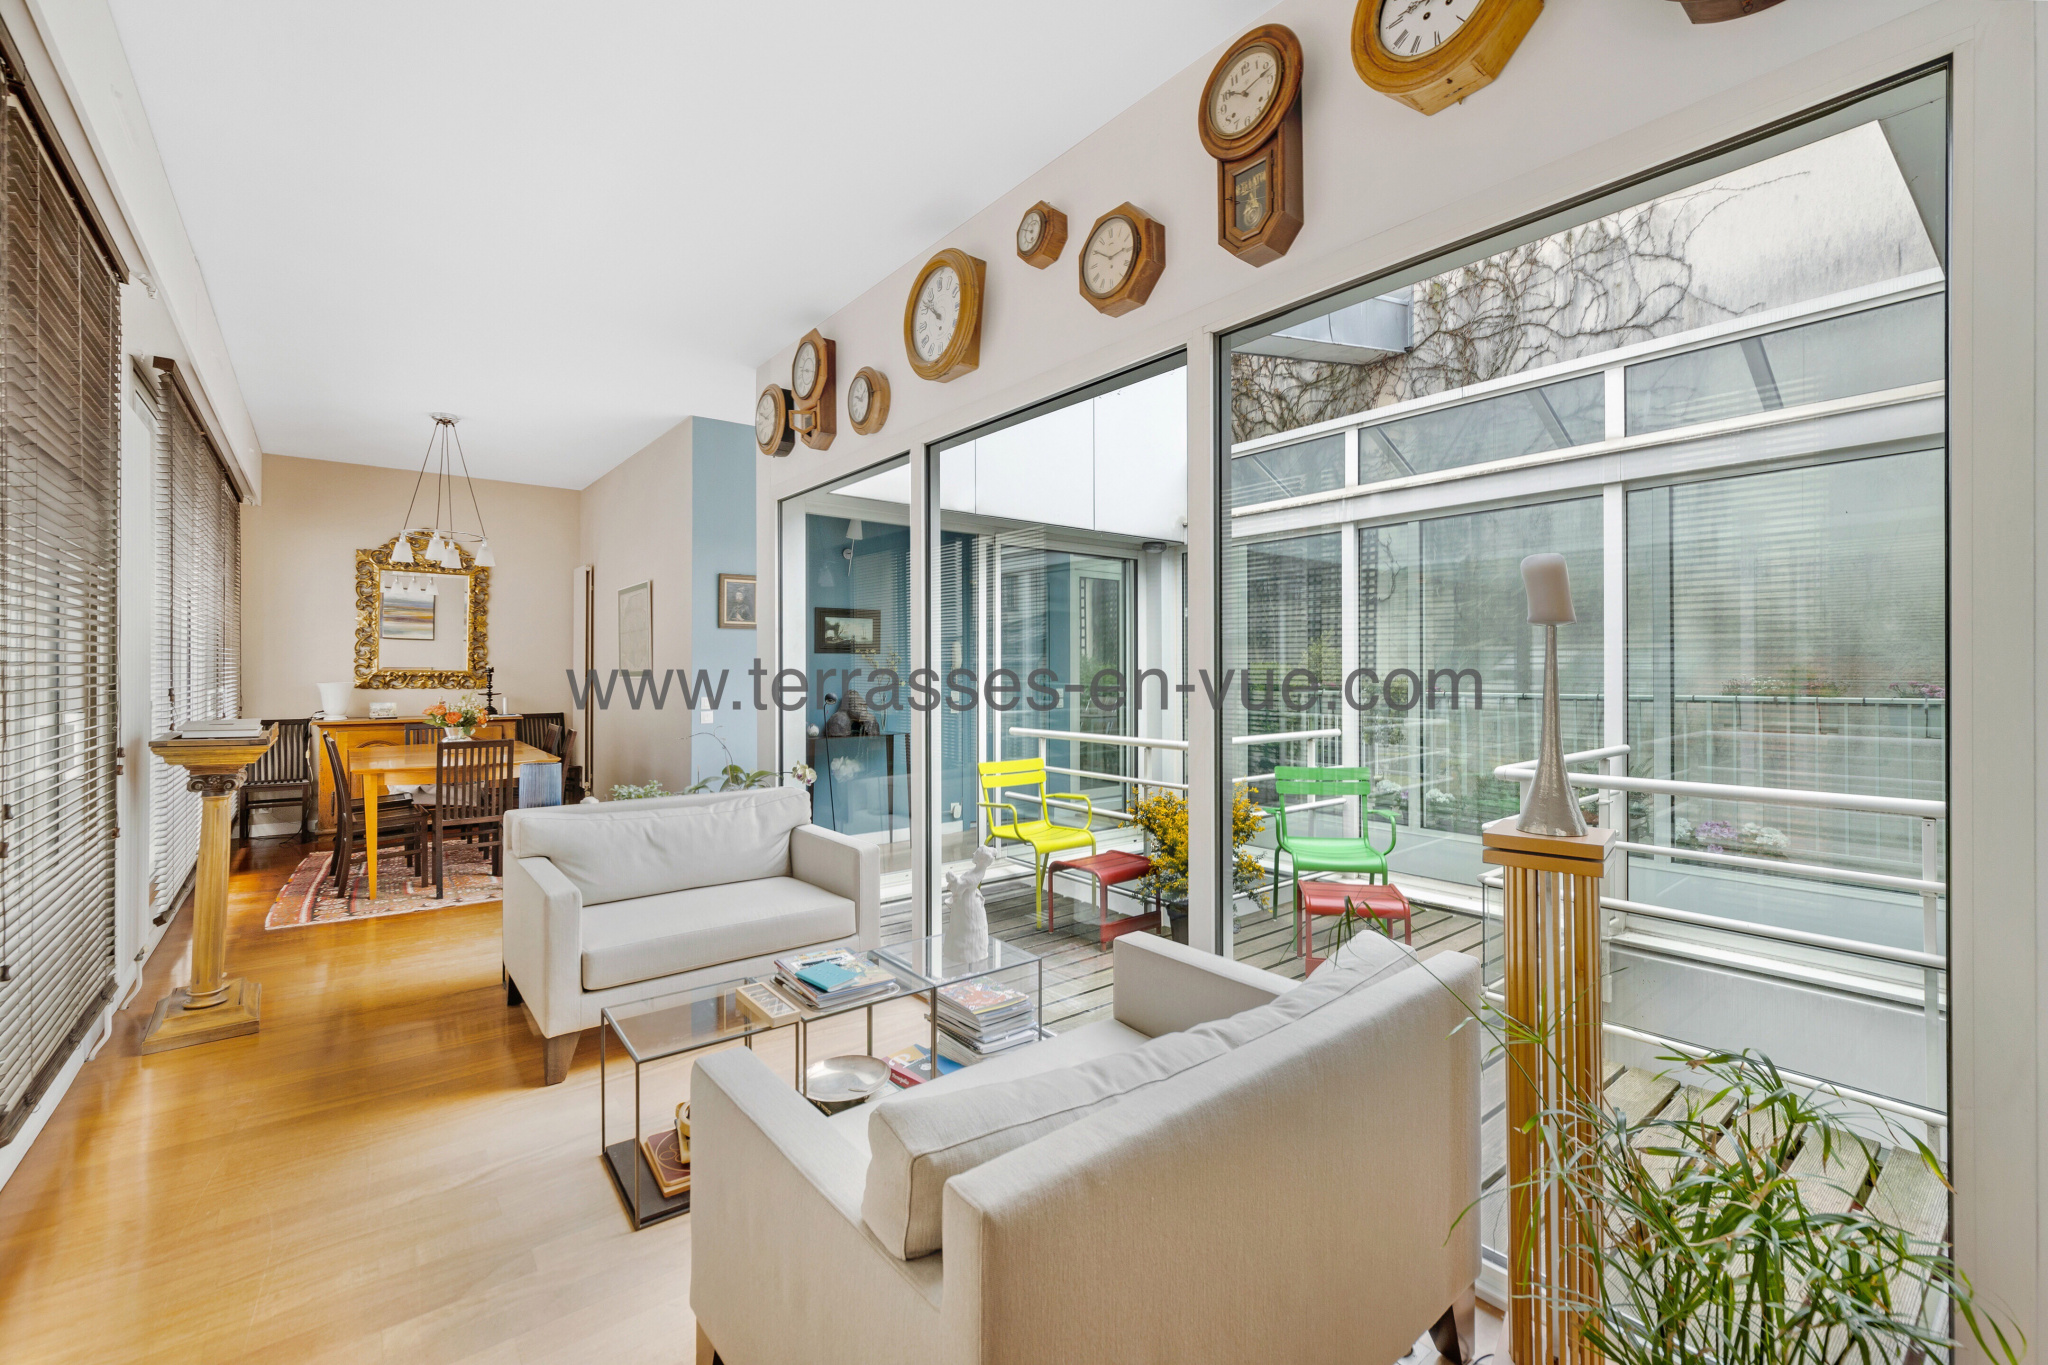 Apartment for sale - Paris / 75017